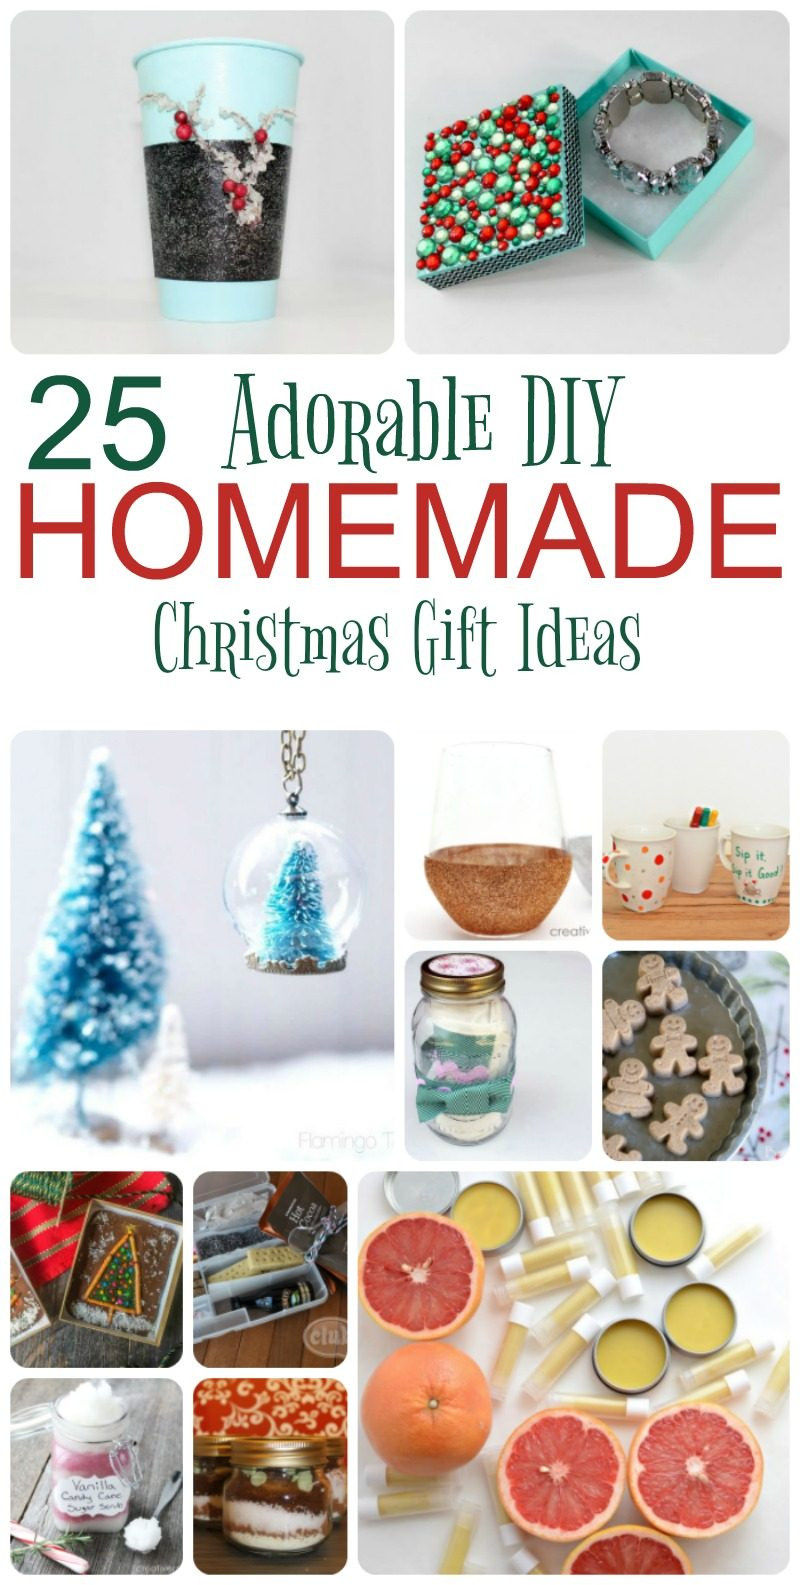 Handmade Holiday Gift Ideas
 25 Adorable Homemade Gifts to Make for Christmas Pretty